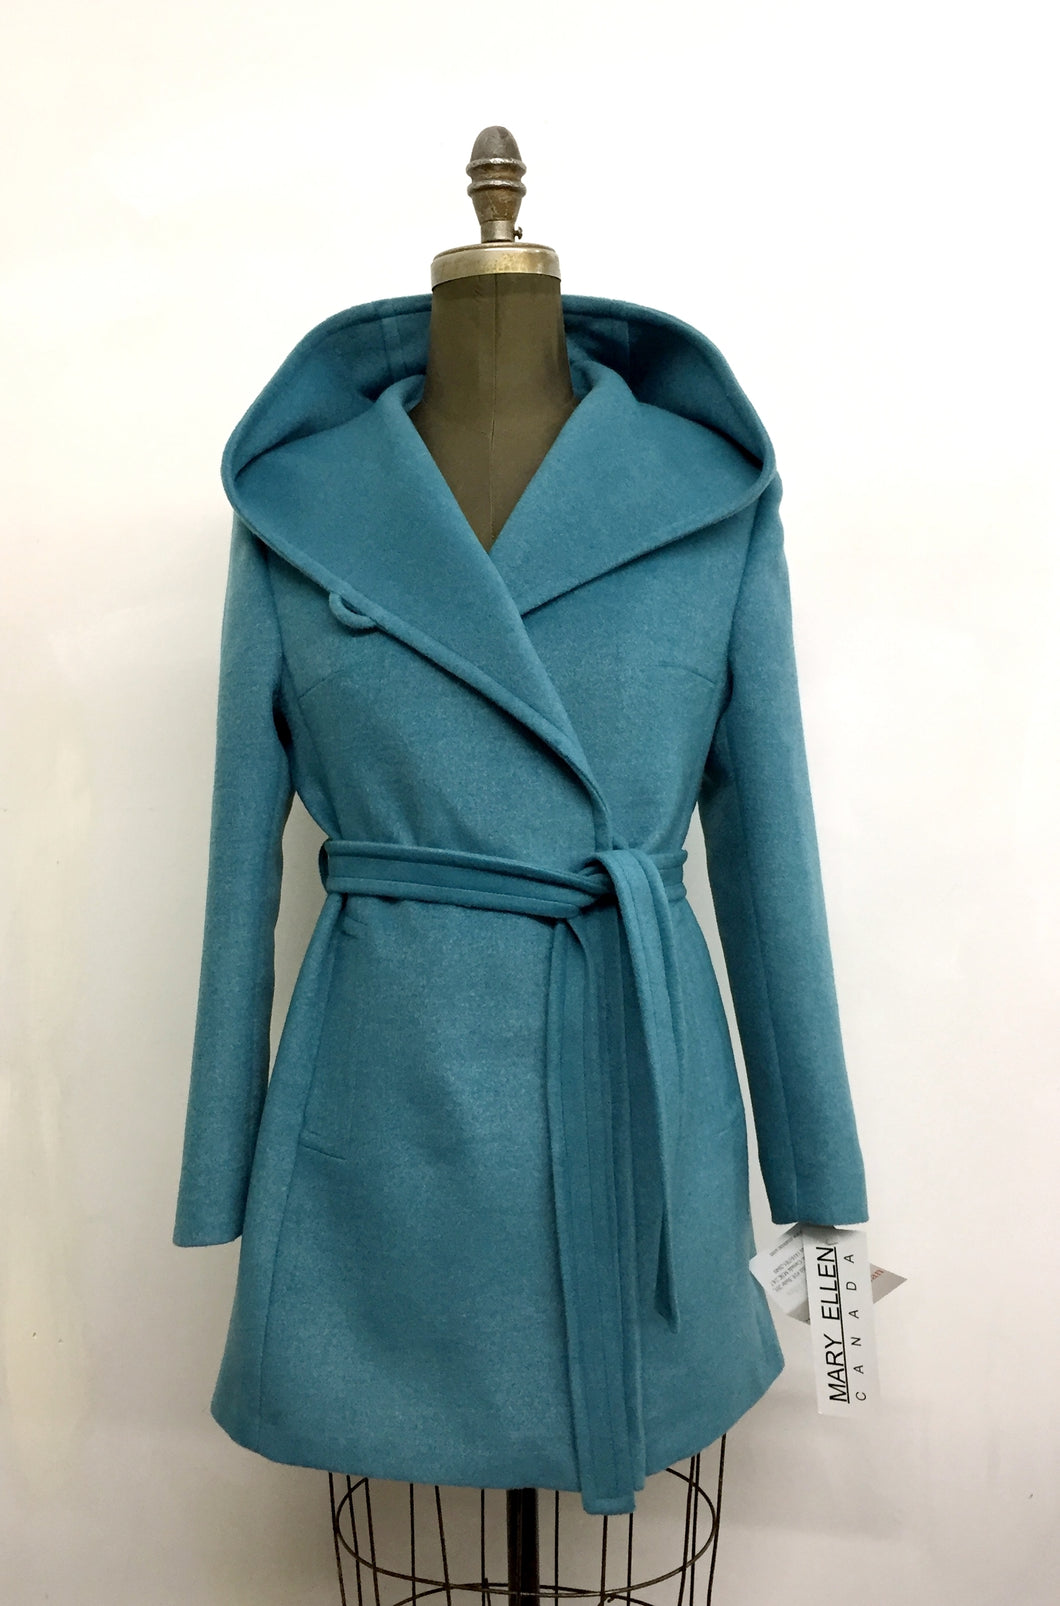 Tiffany Coat - 100% Pure Virgin Wool - Boiled Wool